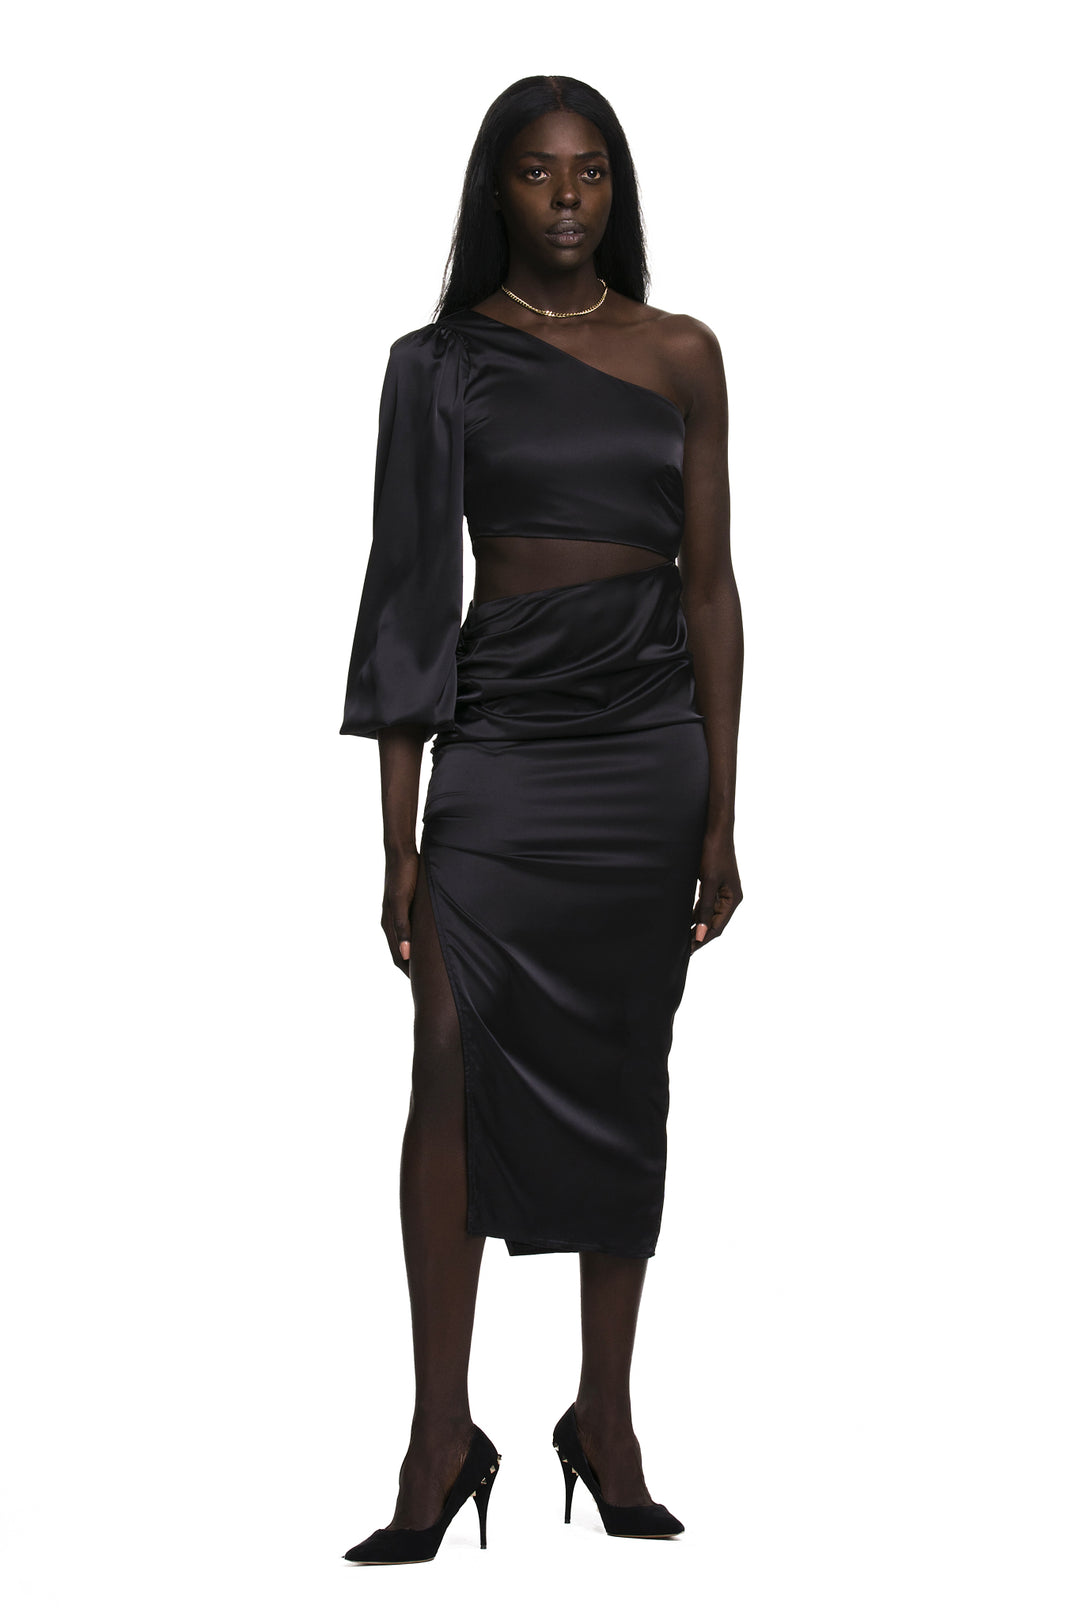 Christabel Black Asymmetrical Midi Dress - Expressive Collective CO.